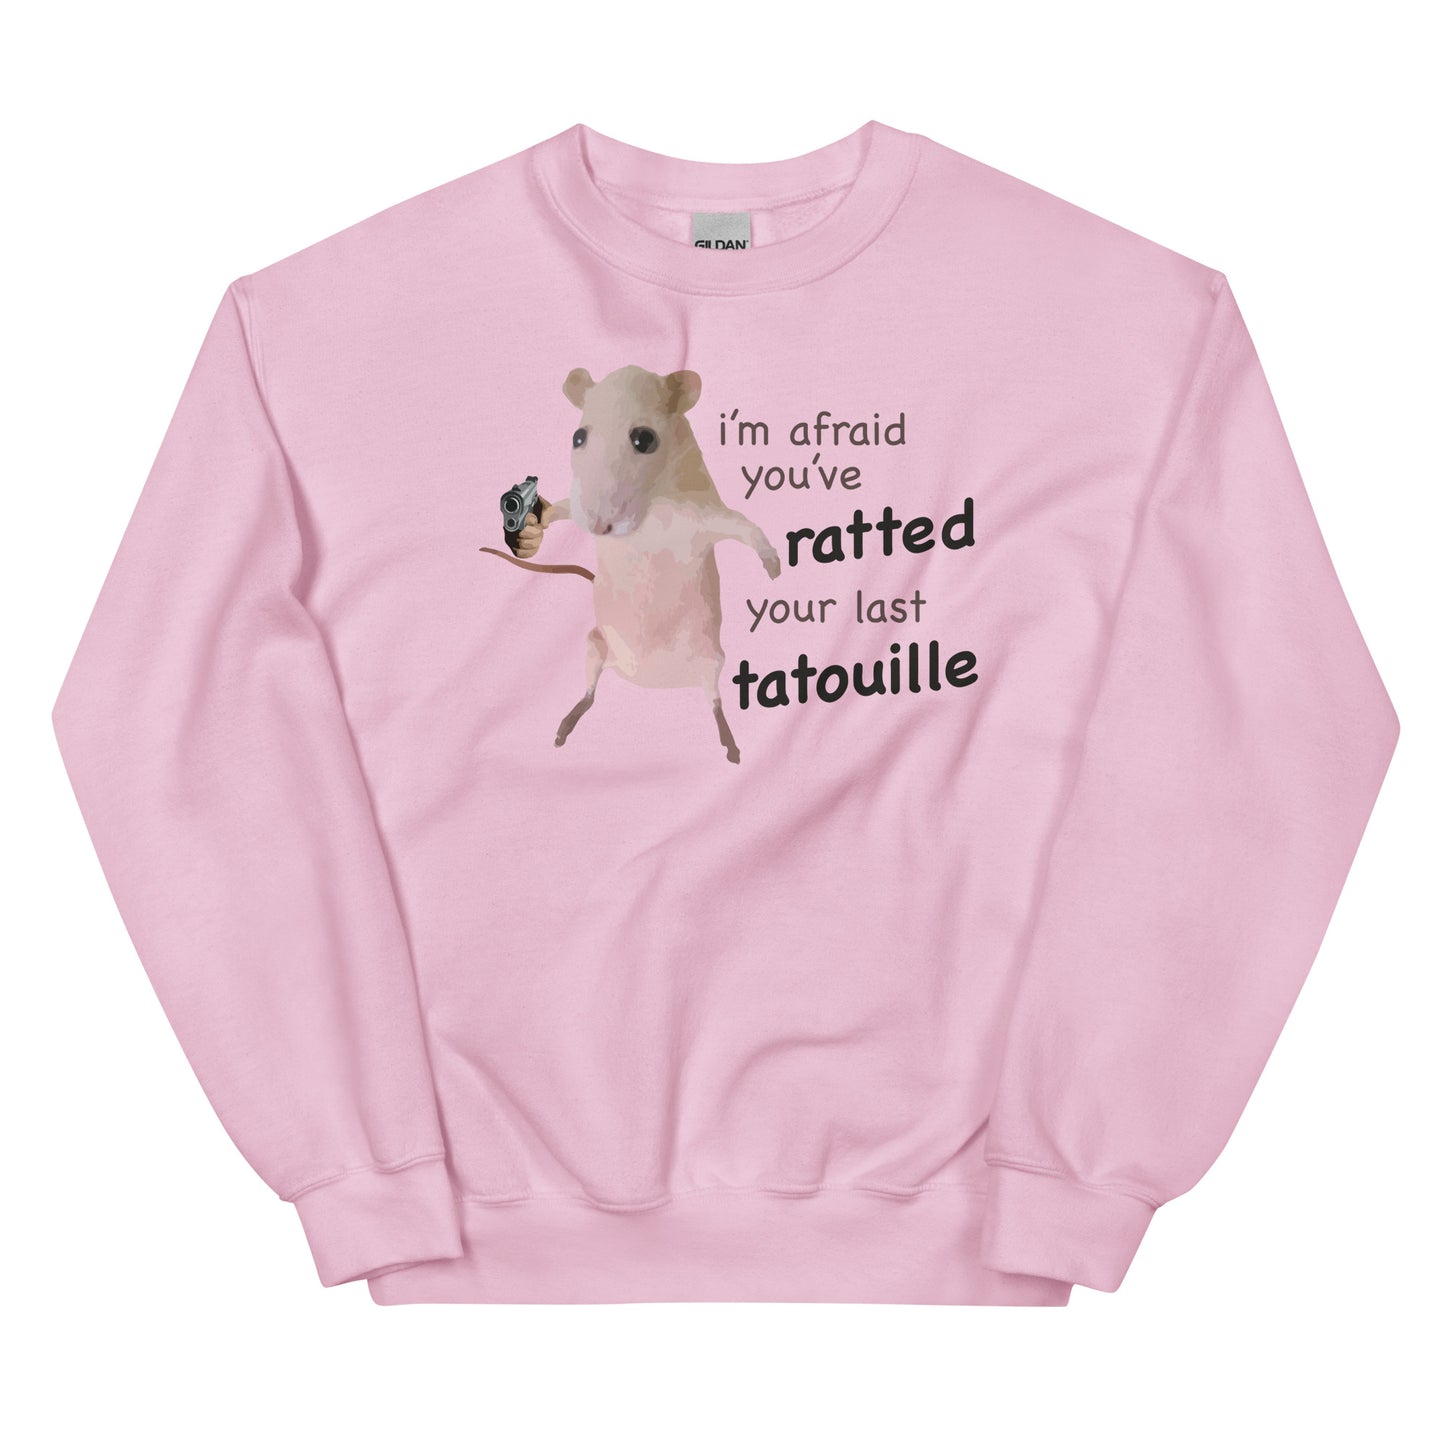 You've Ratted Your Last Tatoullie Unisex Sweatshirt